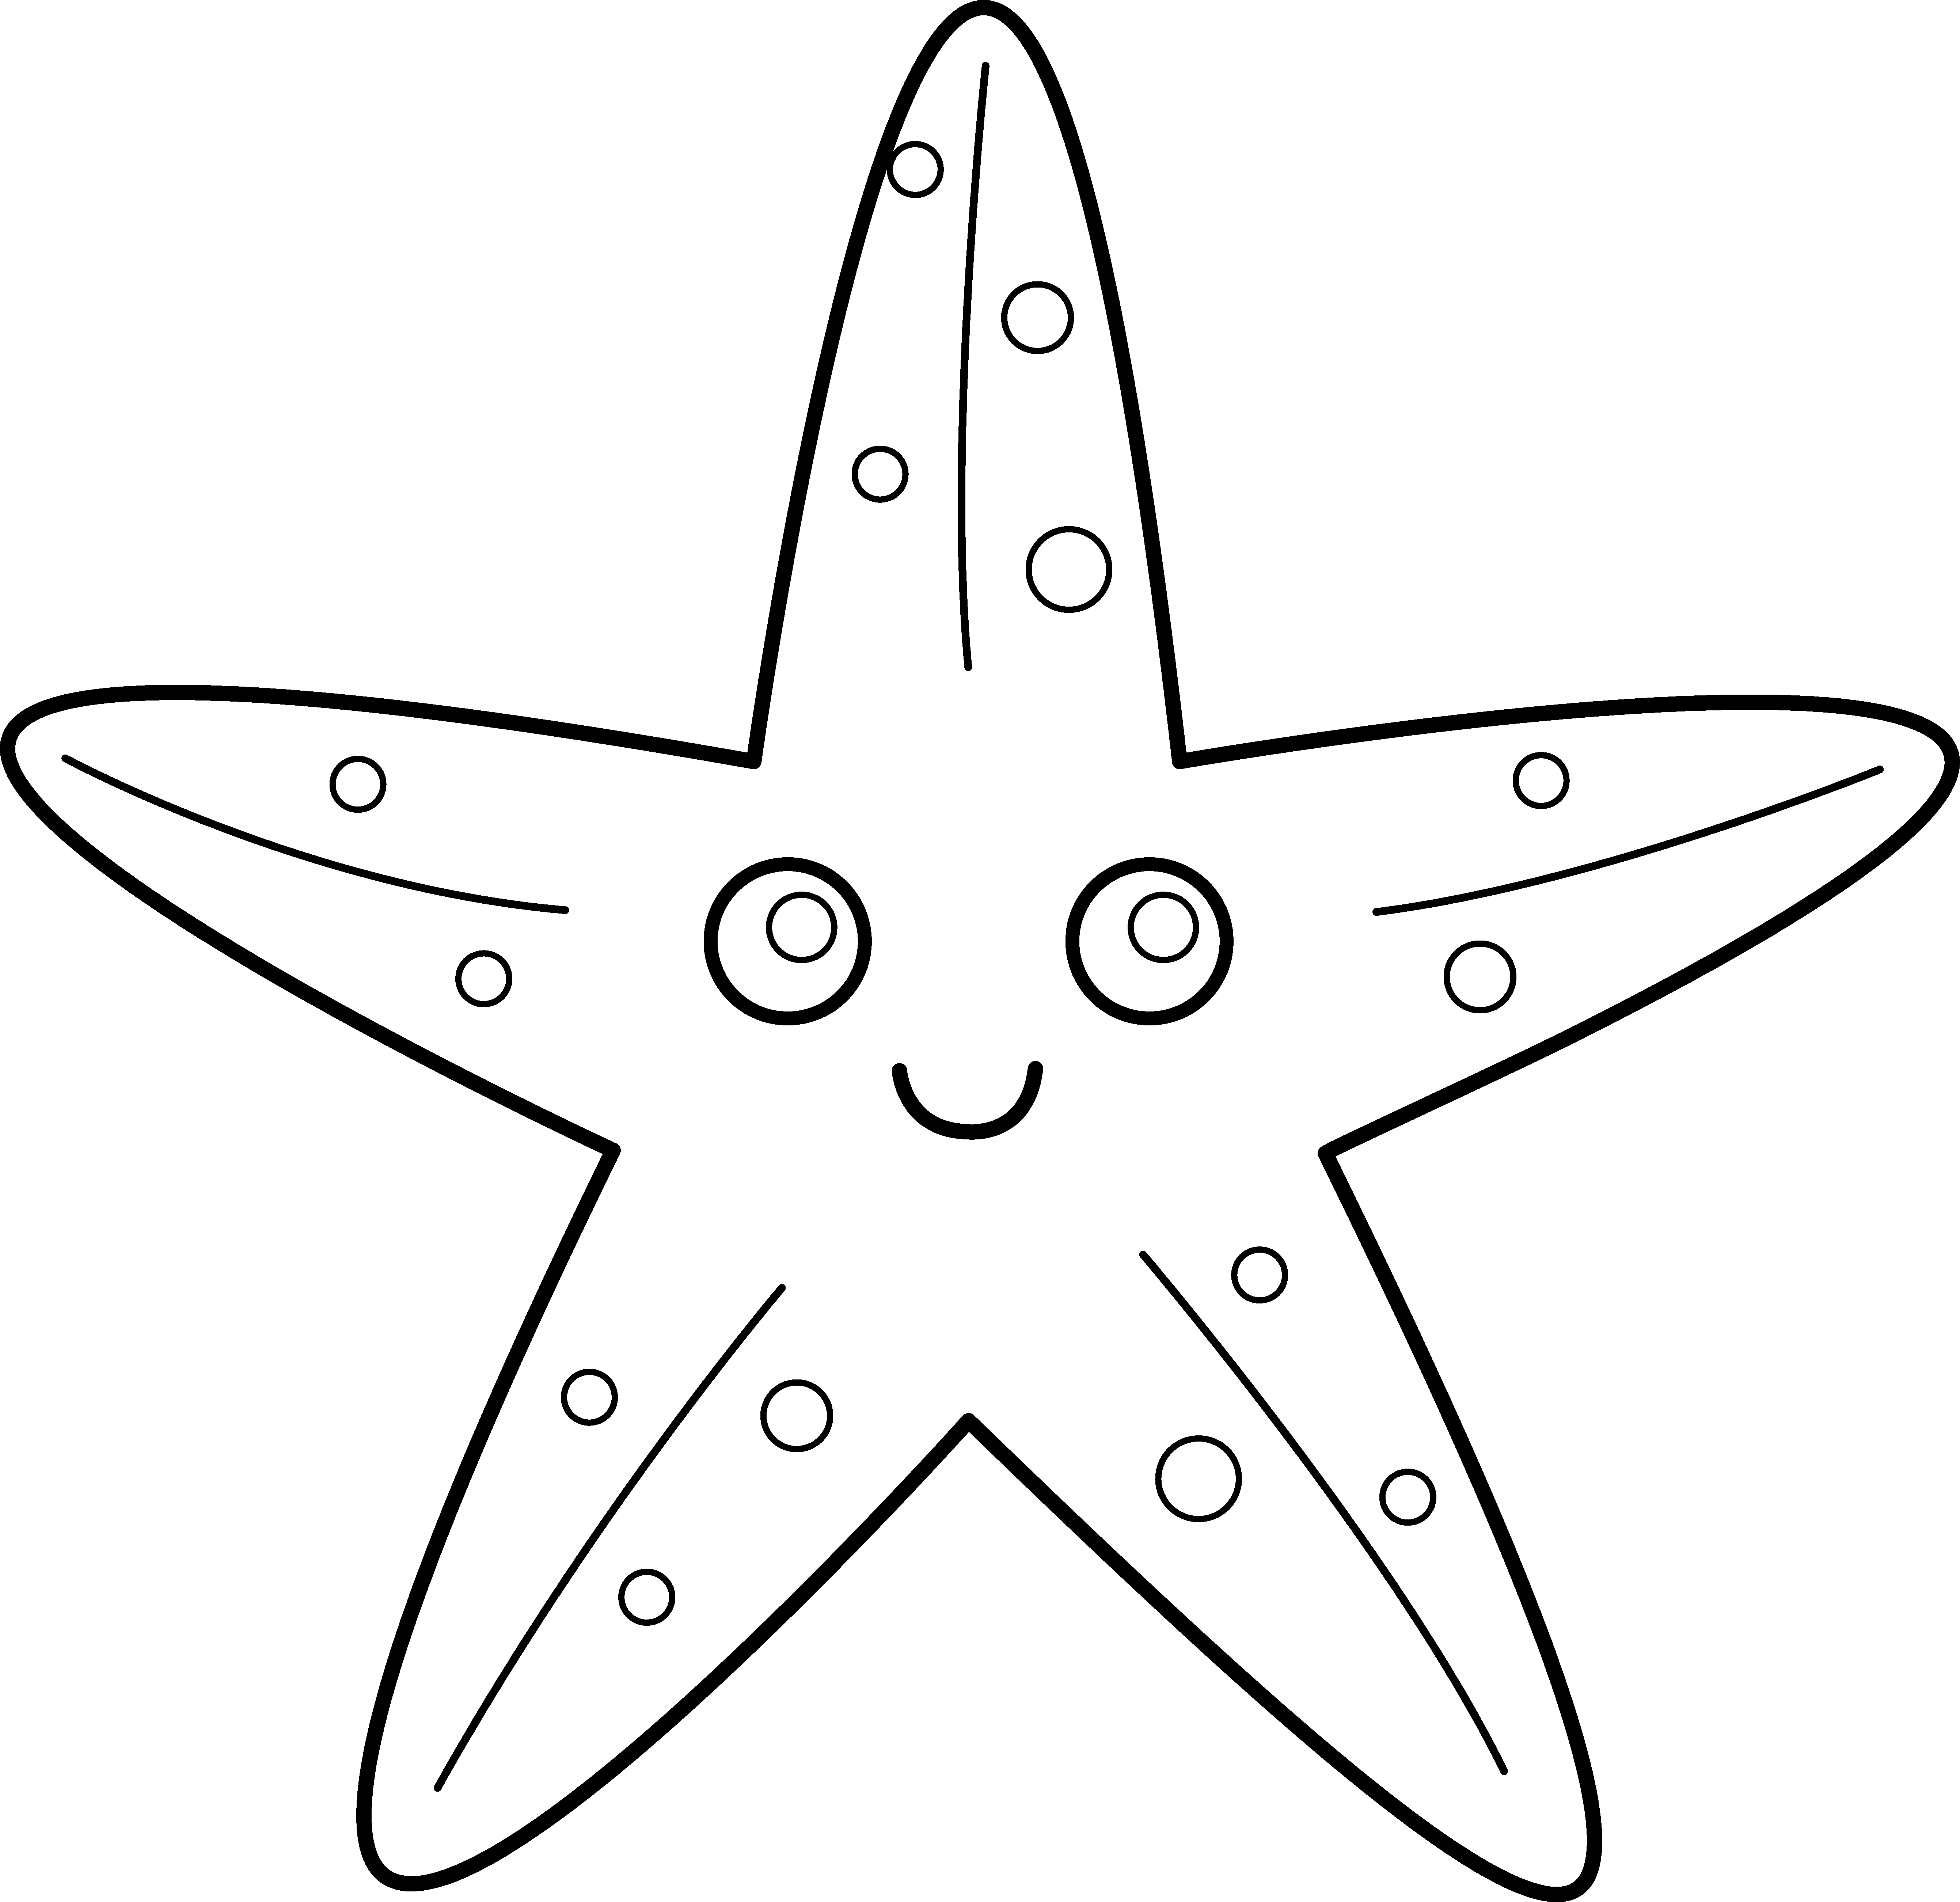 starfish clipart star fish